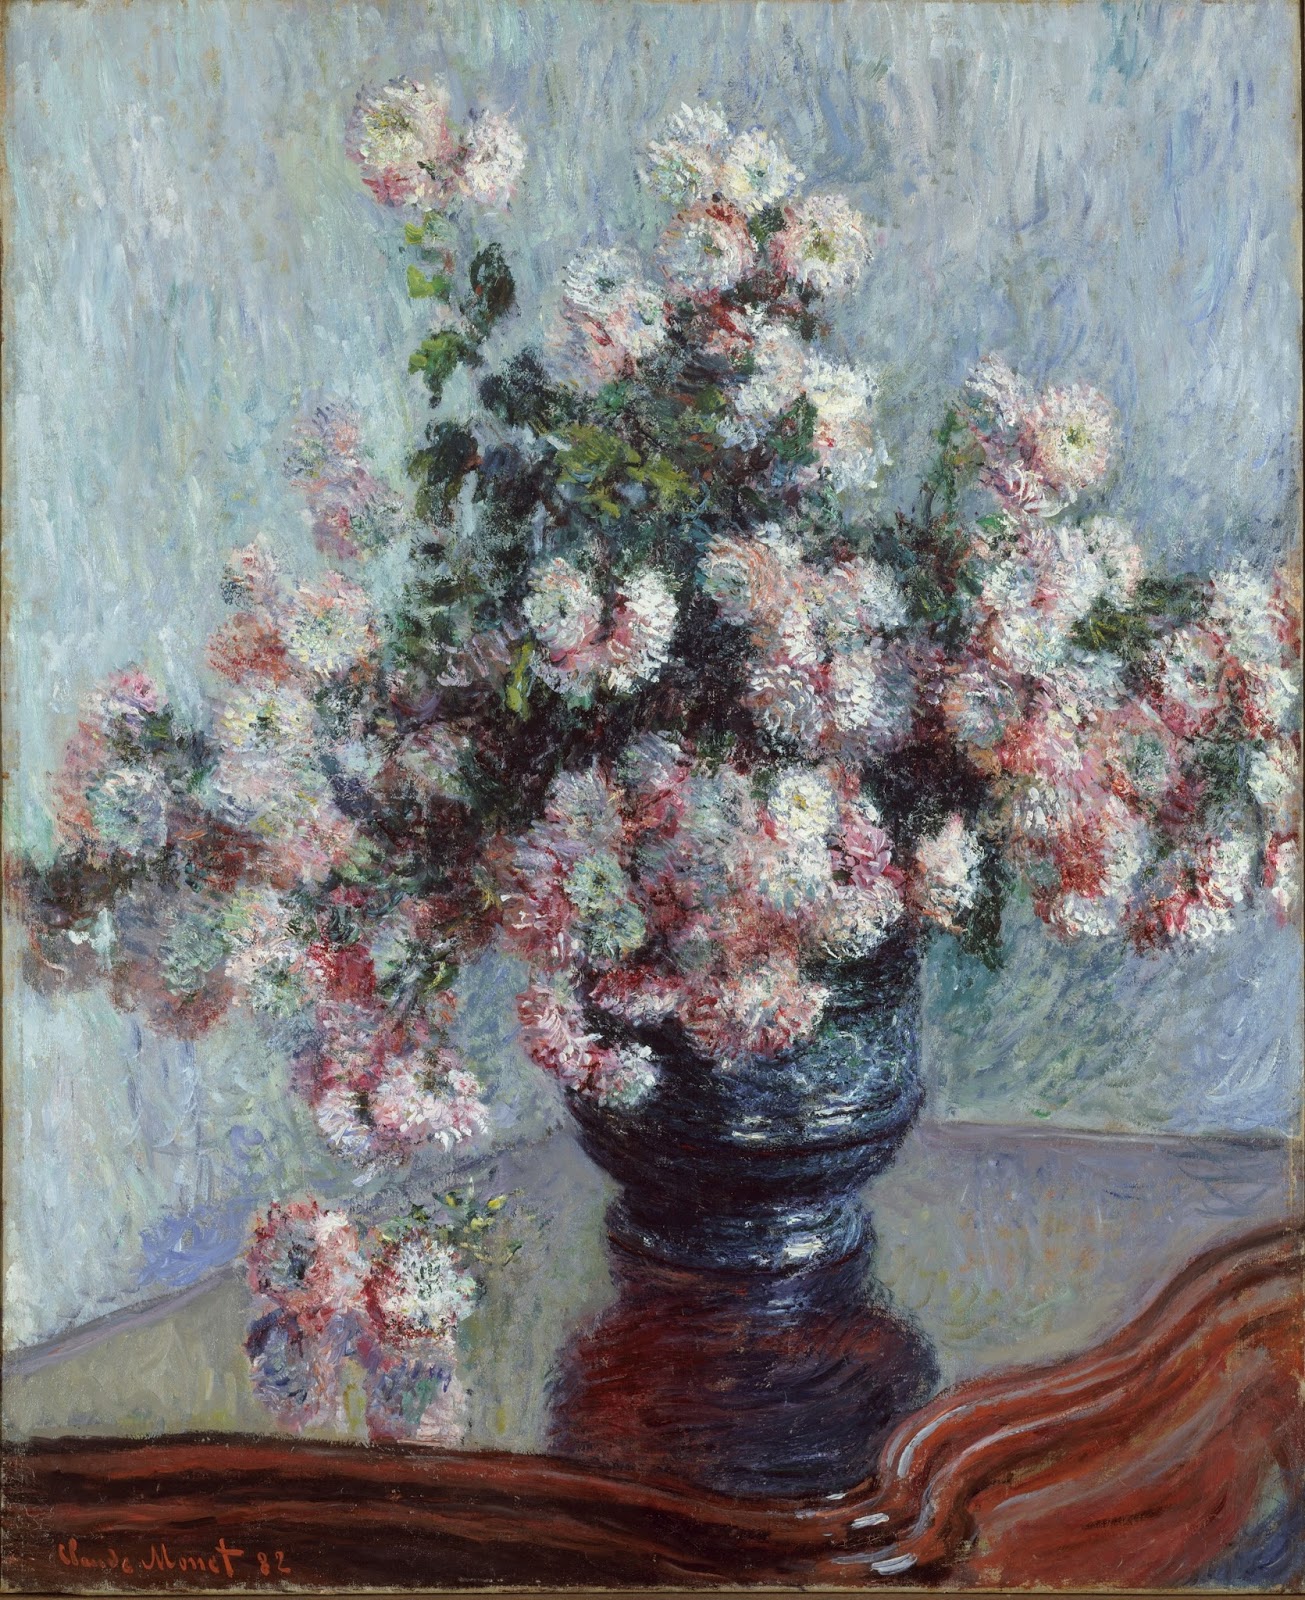 Claude+Monet-1840-1926 (186).jpg